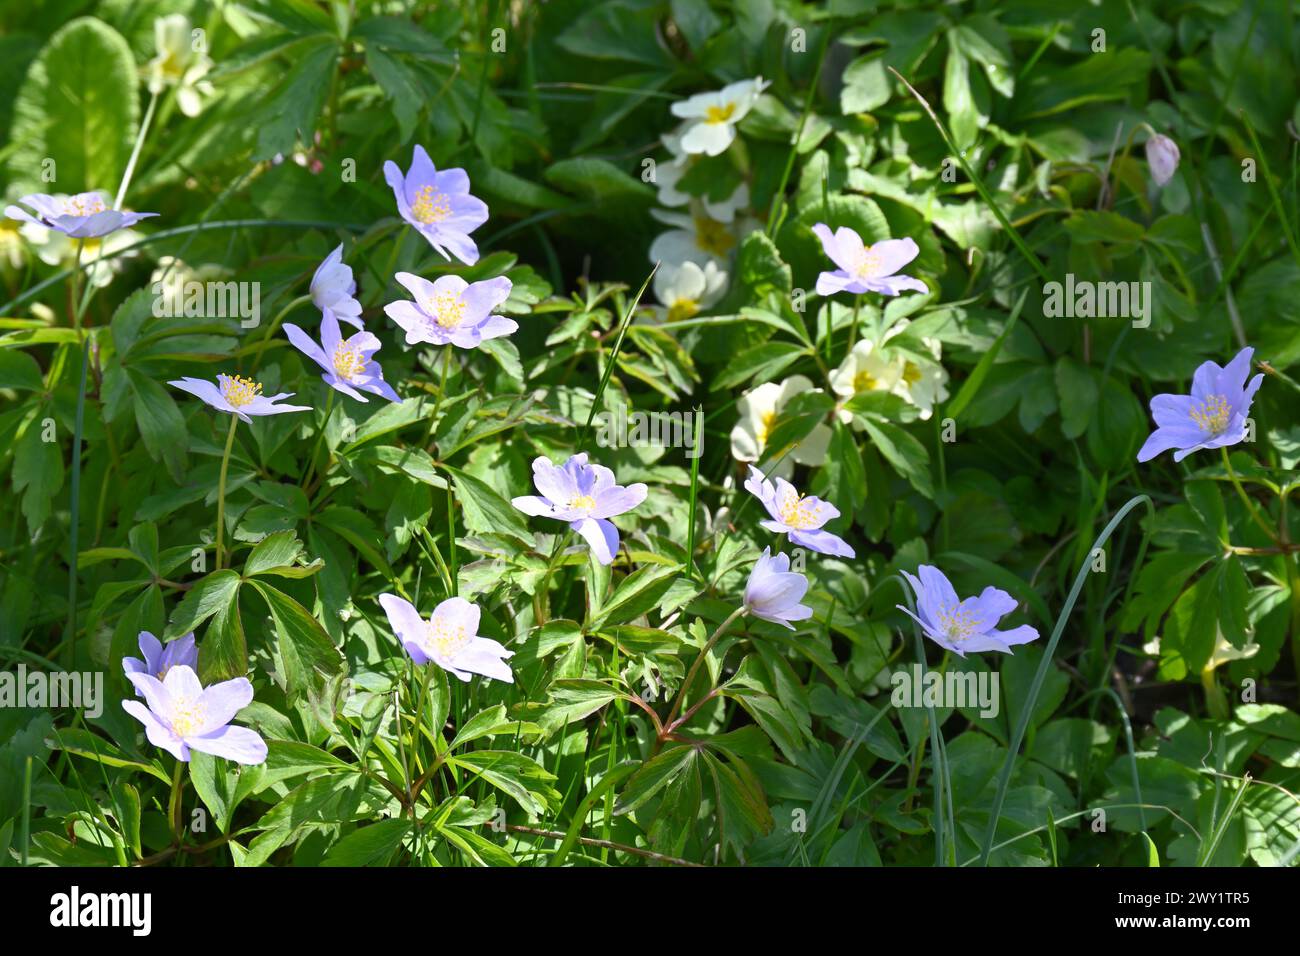 Pale blue spring flowers of wood anemone, anemone nemorosa Robinsoniana, and yellow primroses primula vulgaris  naturalised in grass, UK garden March Stock Photo